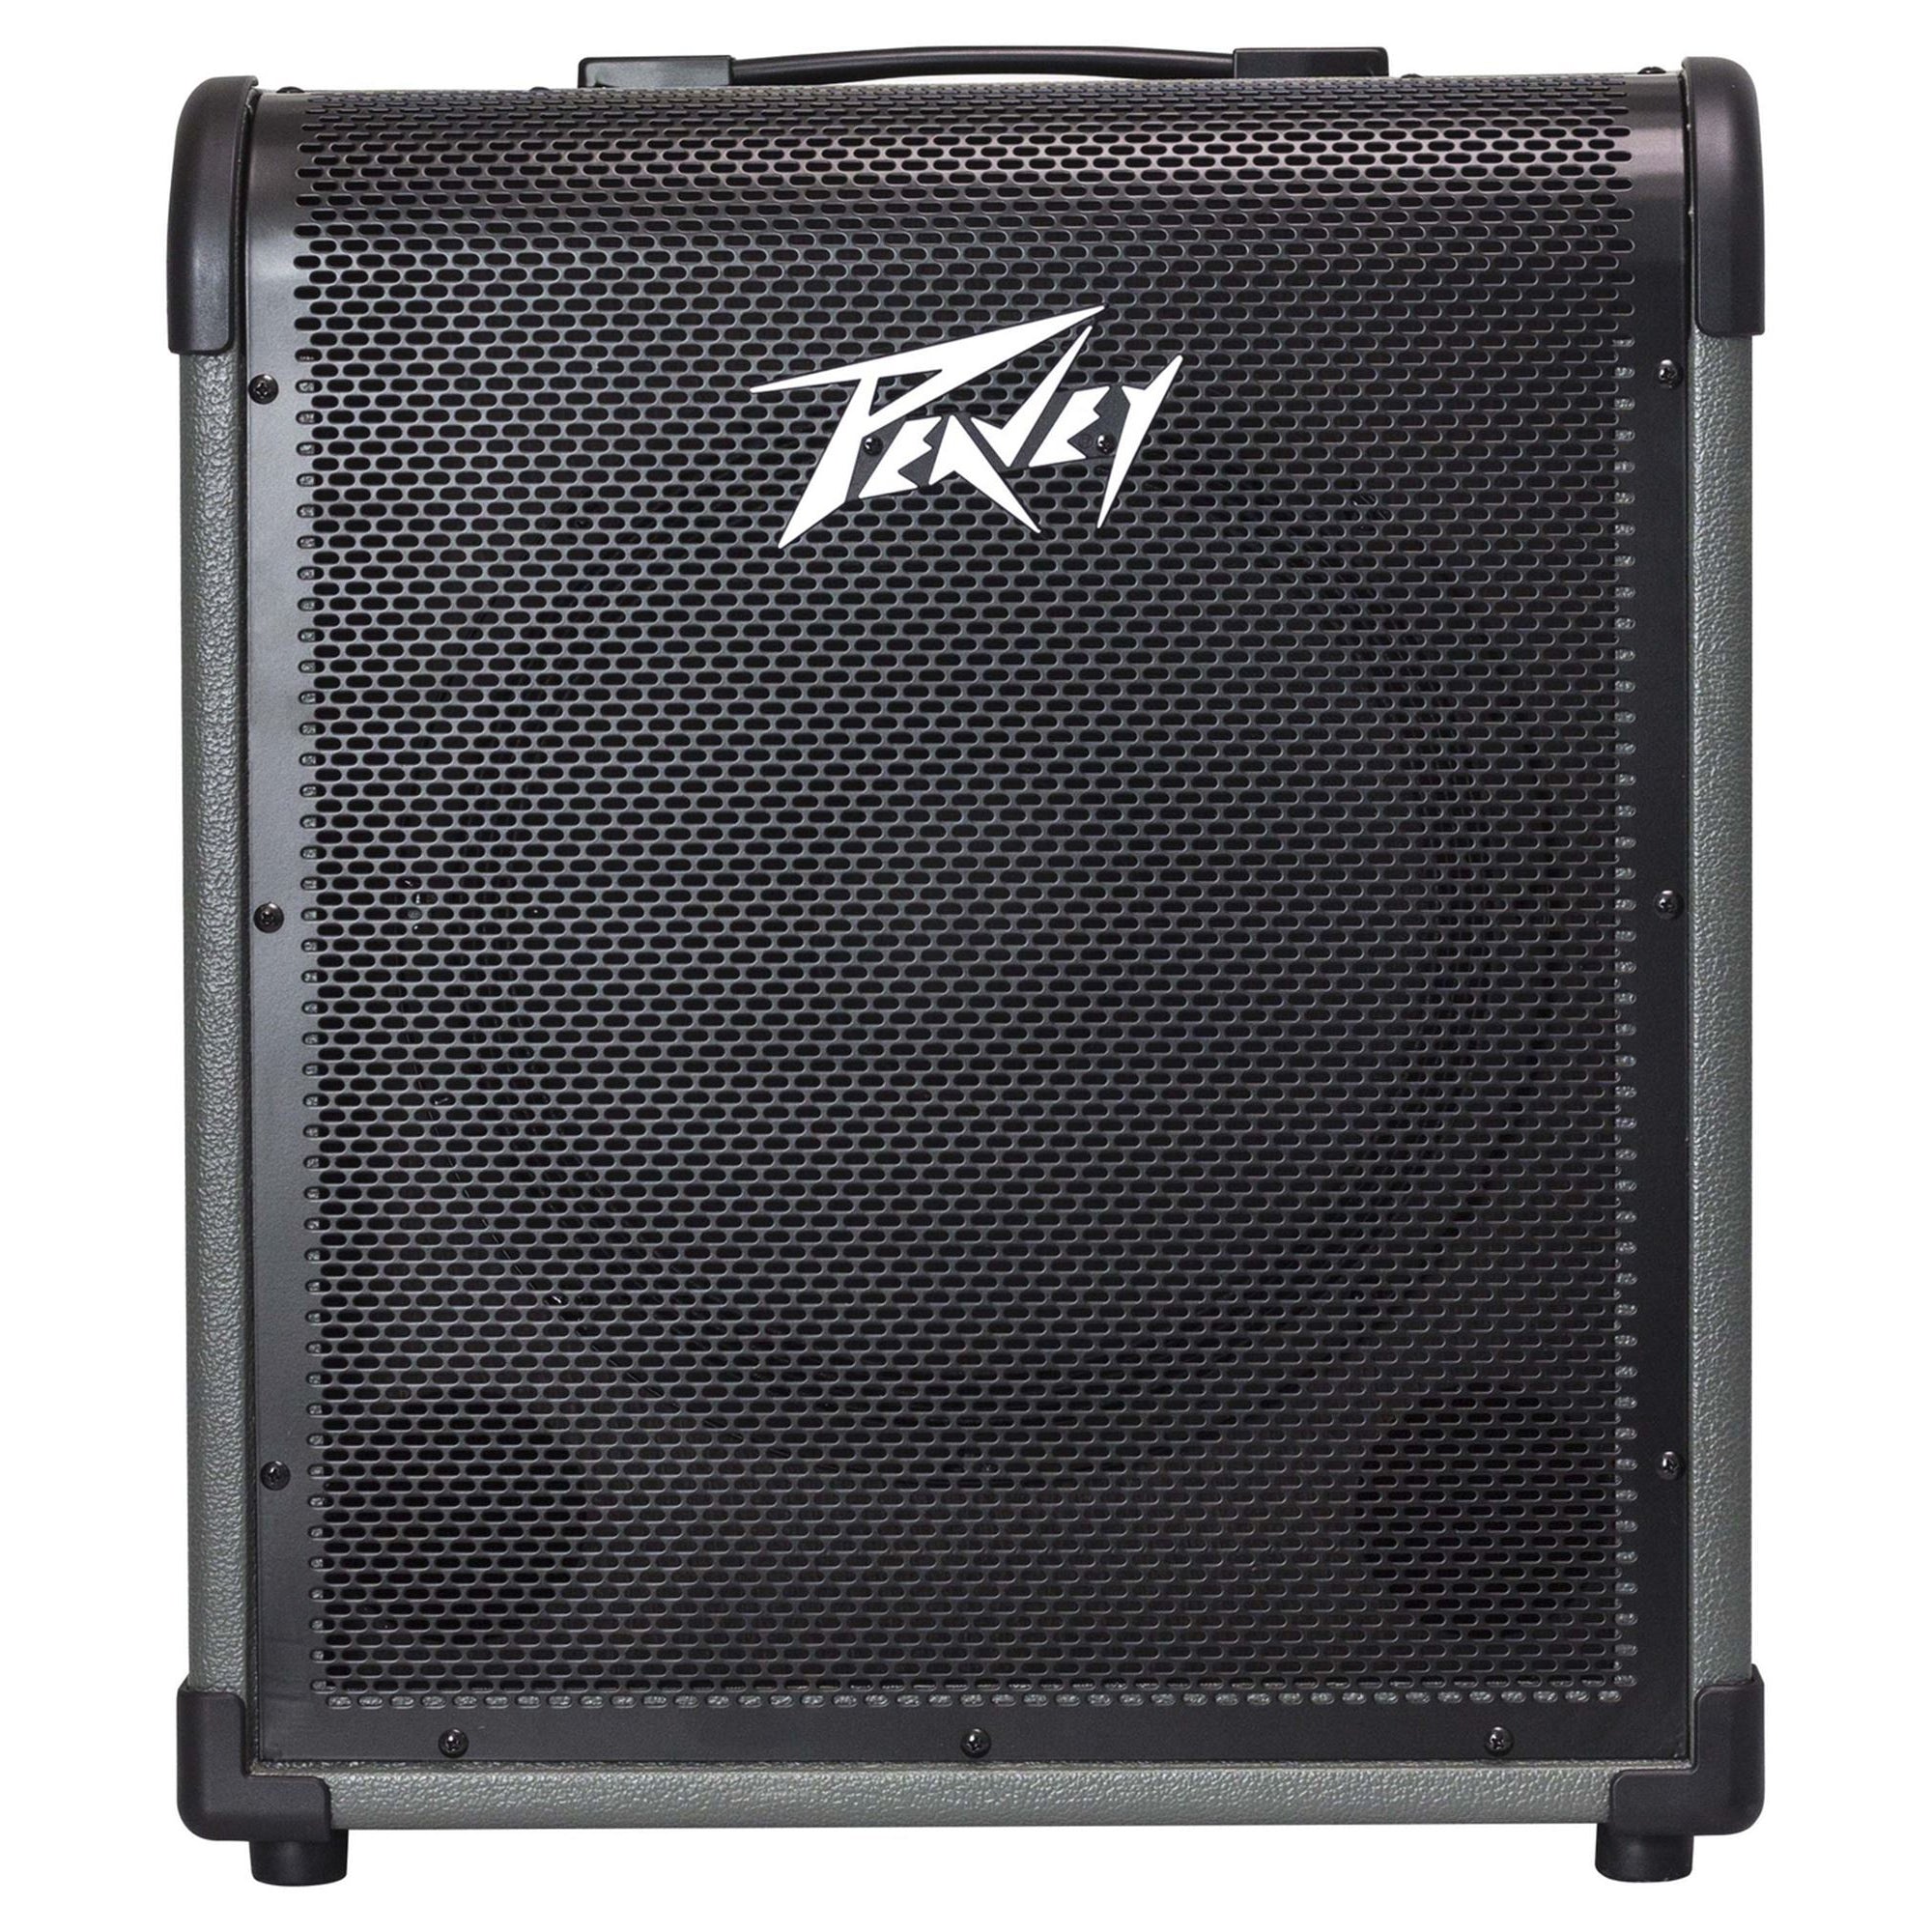 Peavey Max 150 Bass Combo Amp with 12" Speaker-150 Watts-Music World Academy